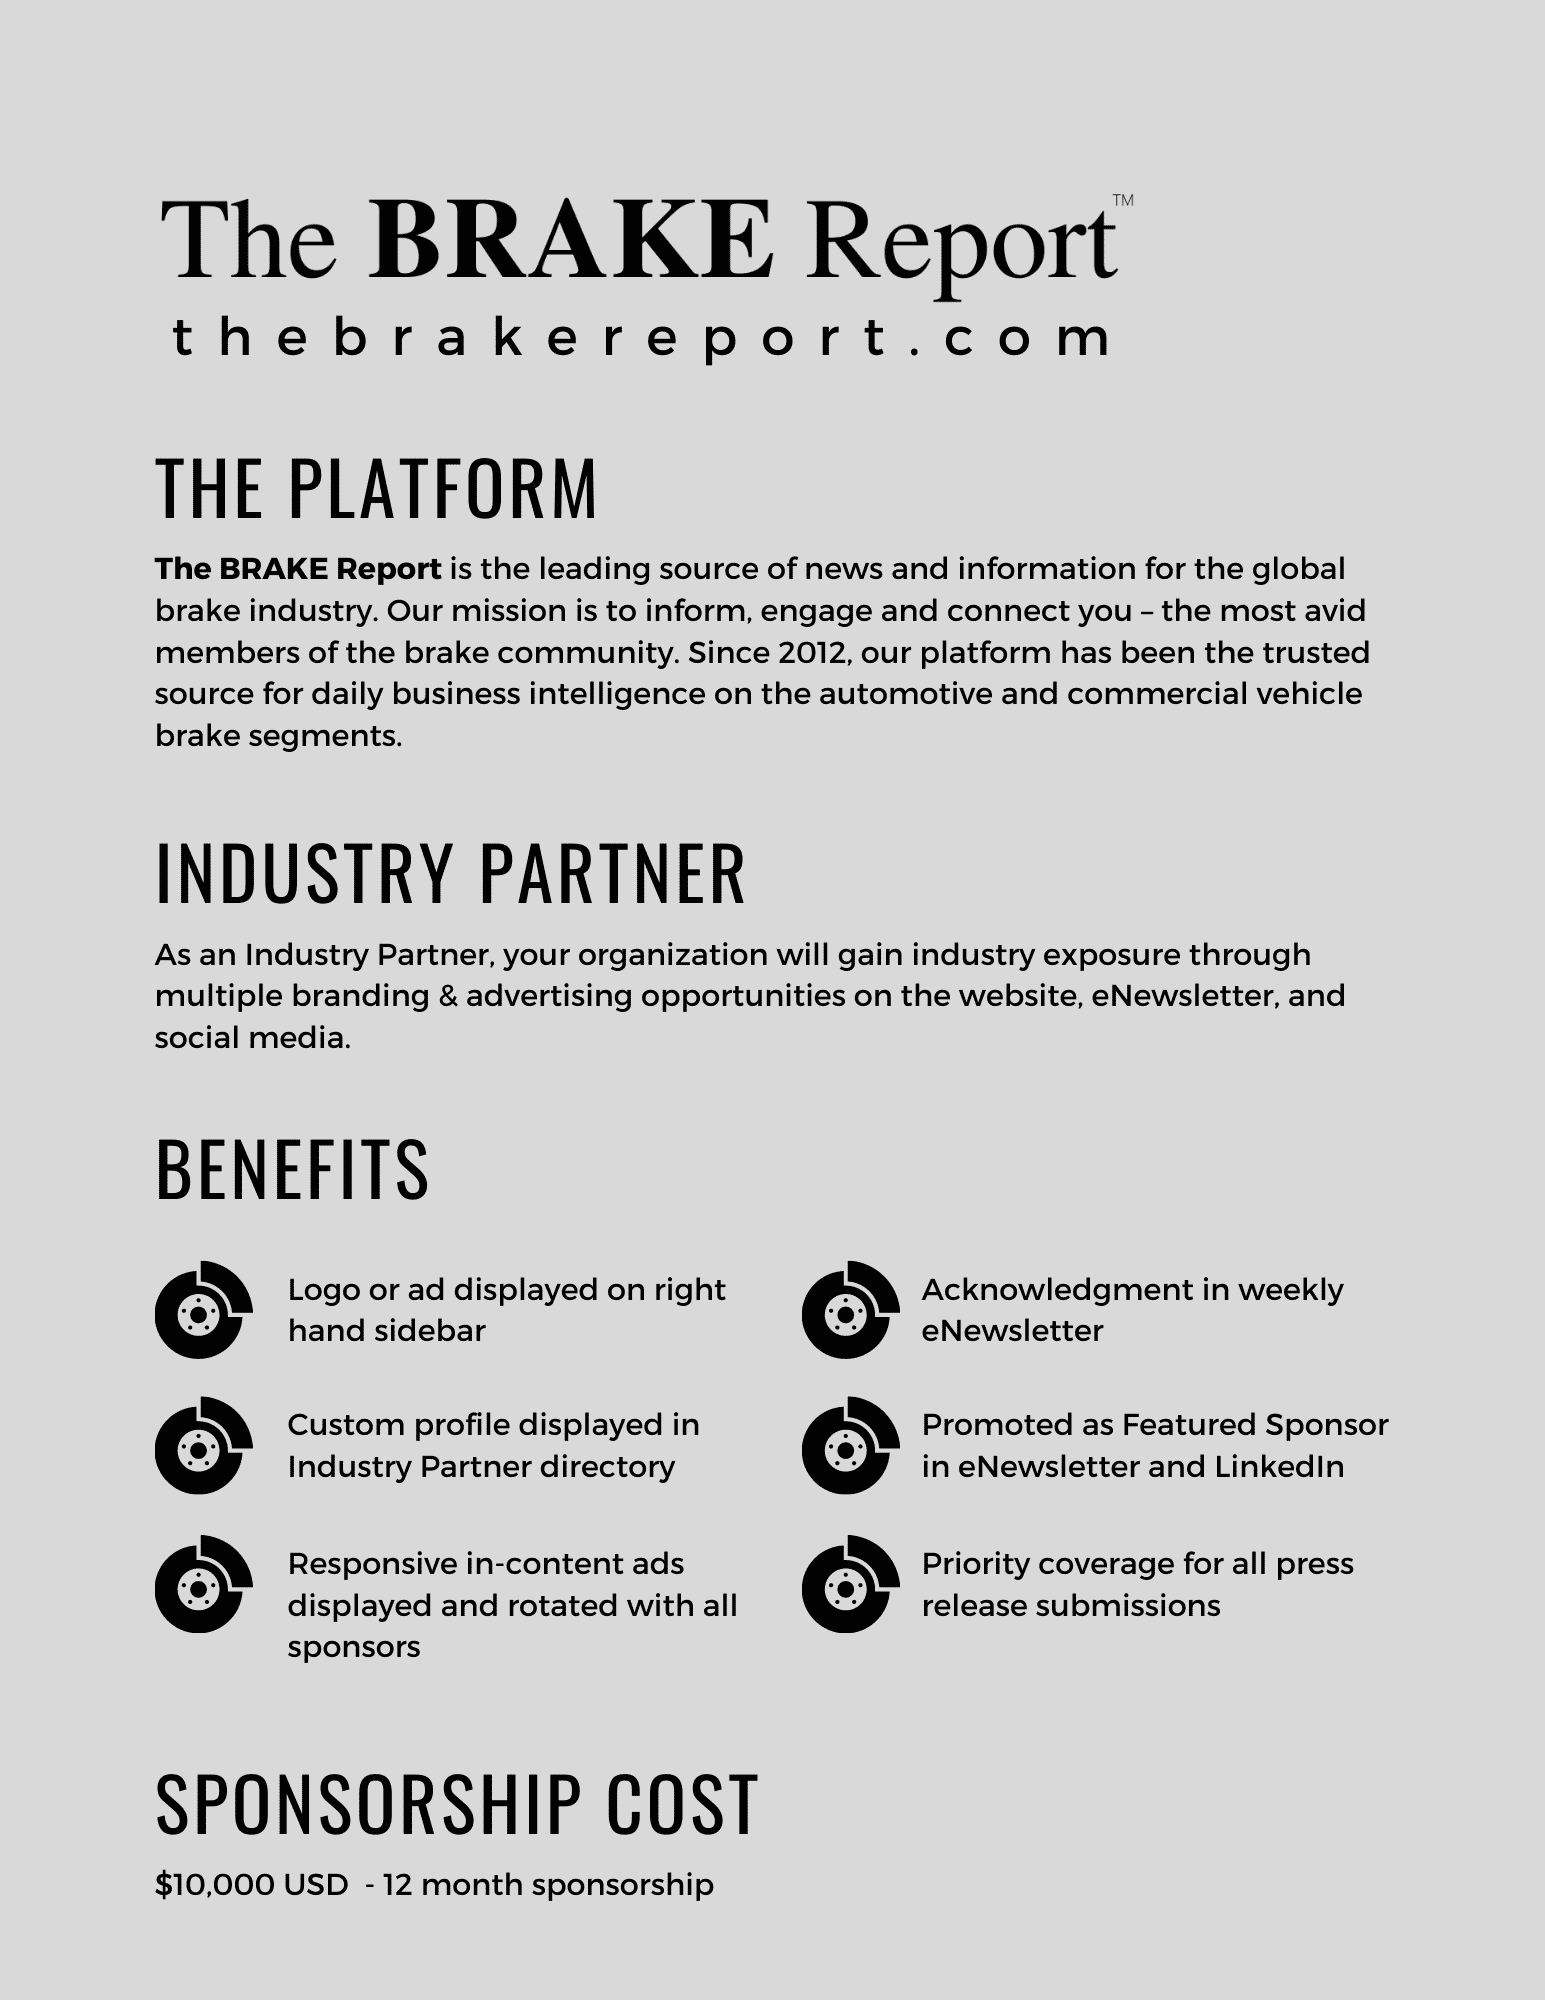 The BRAKE Report Sponsorship Guide